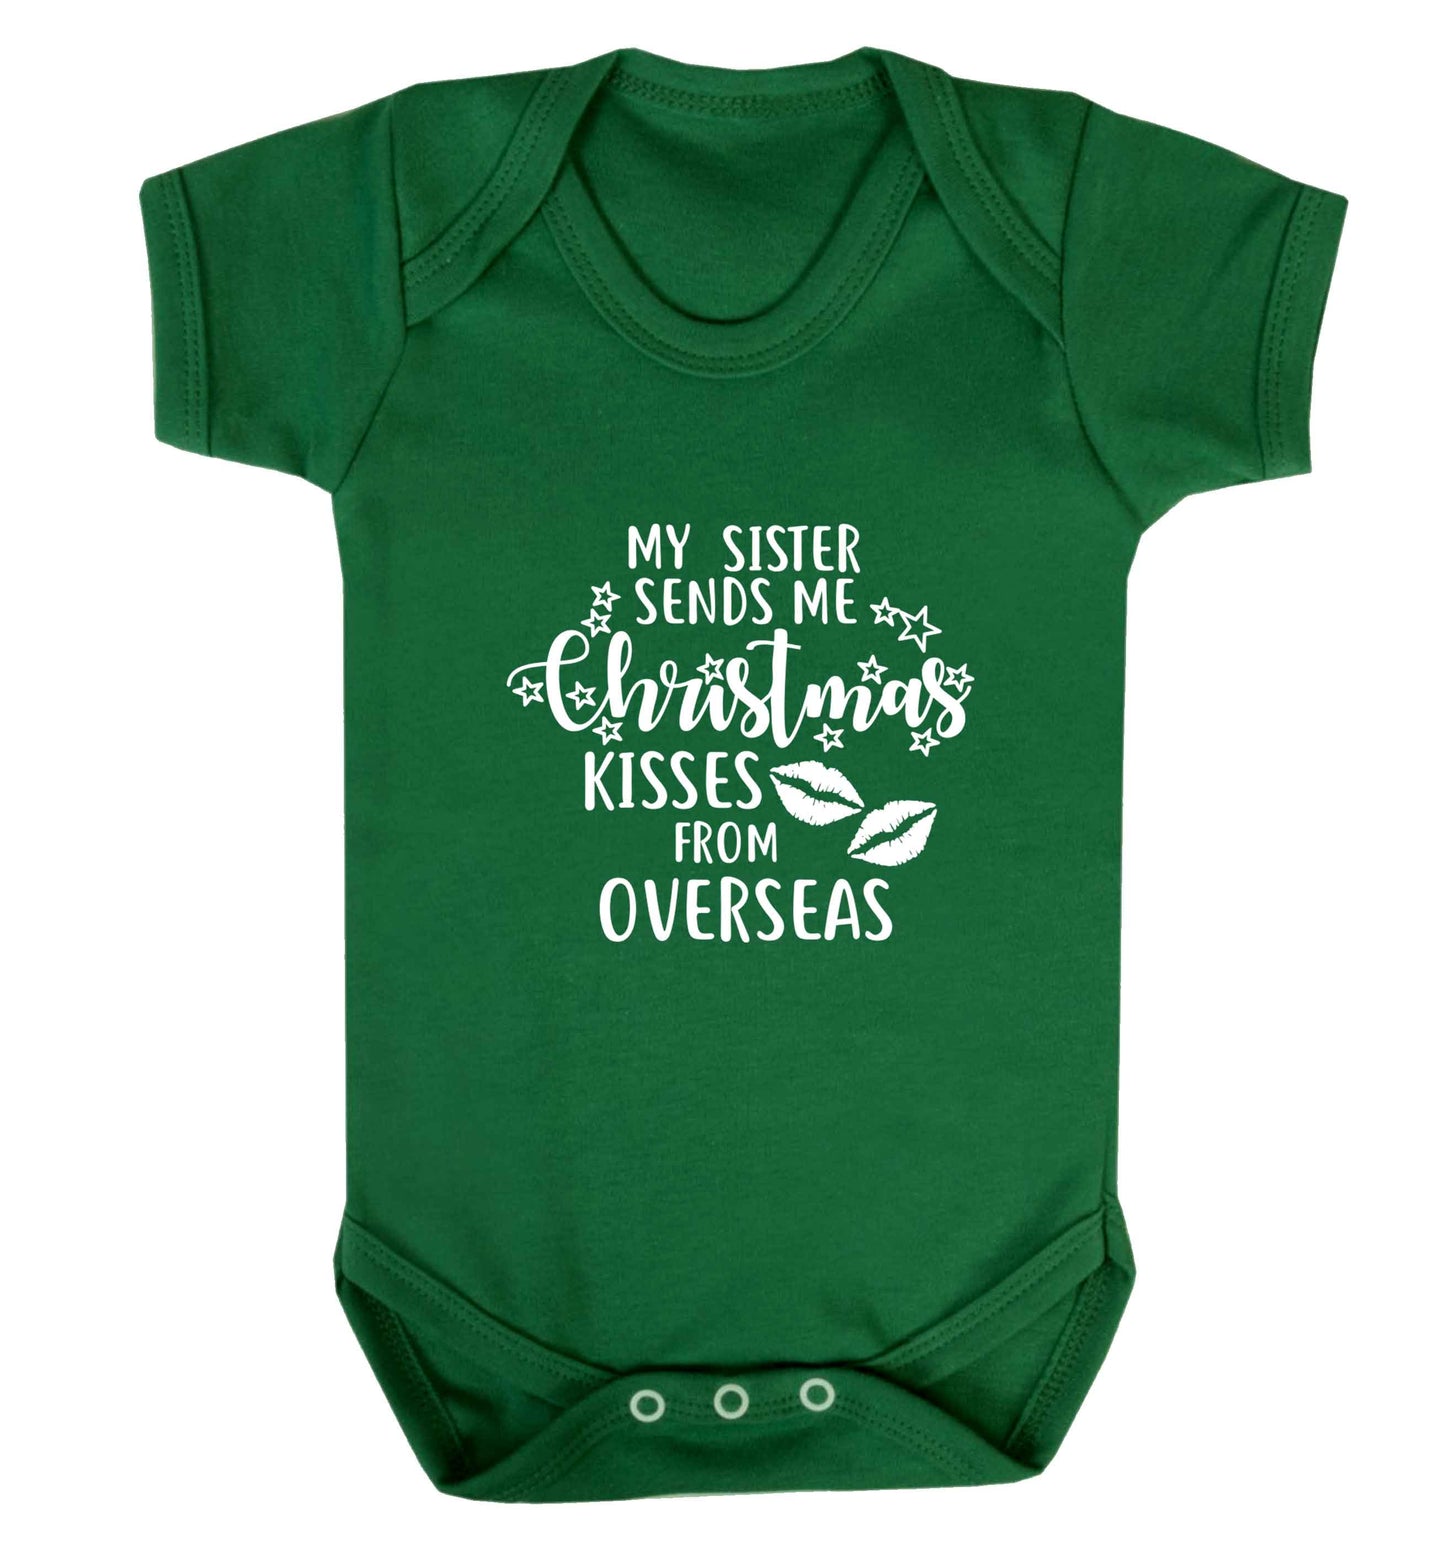 Grandad Christmas Kisses Overseas baby vest green 18-24 months